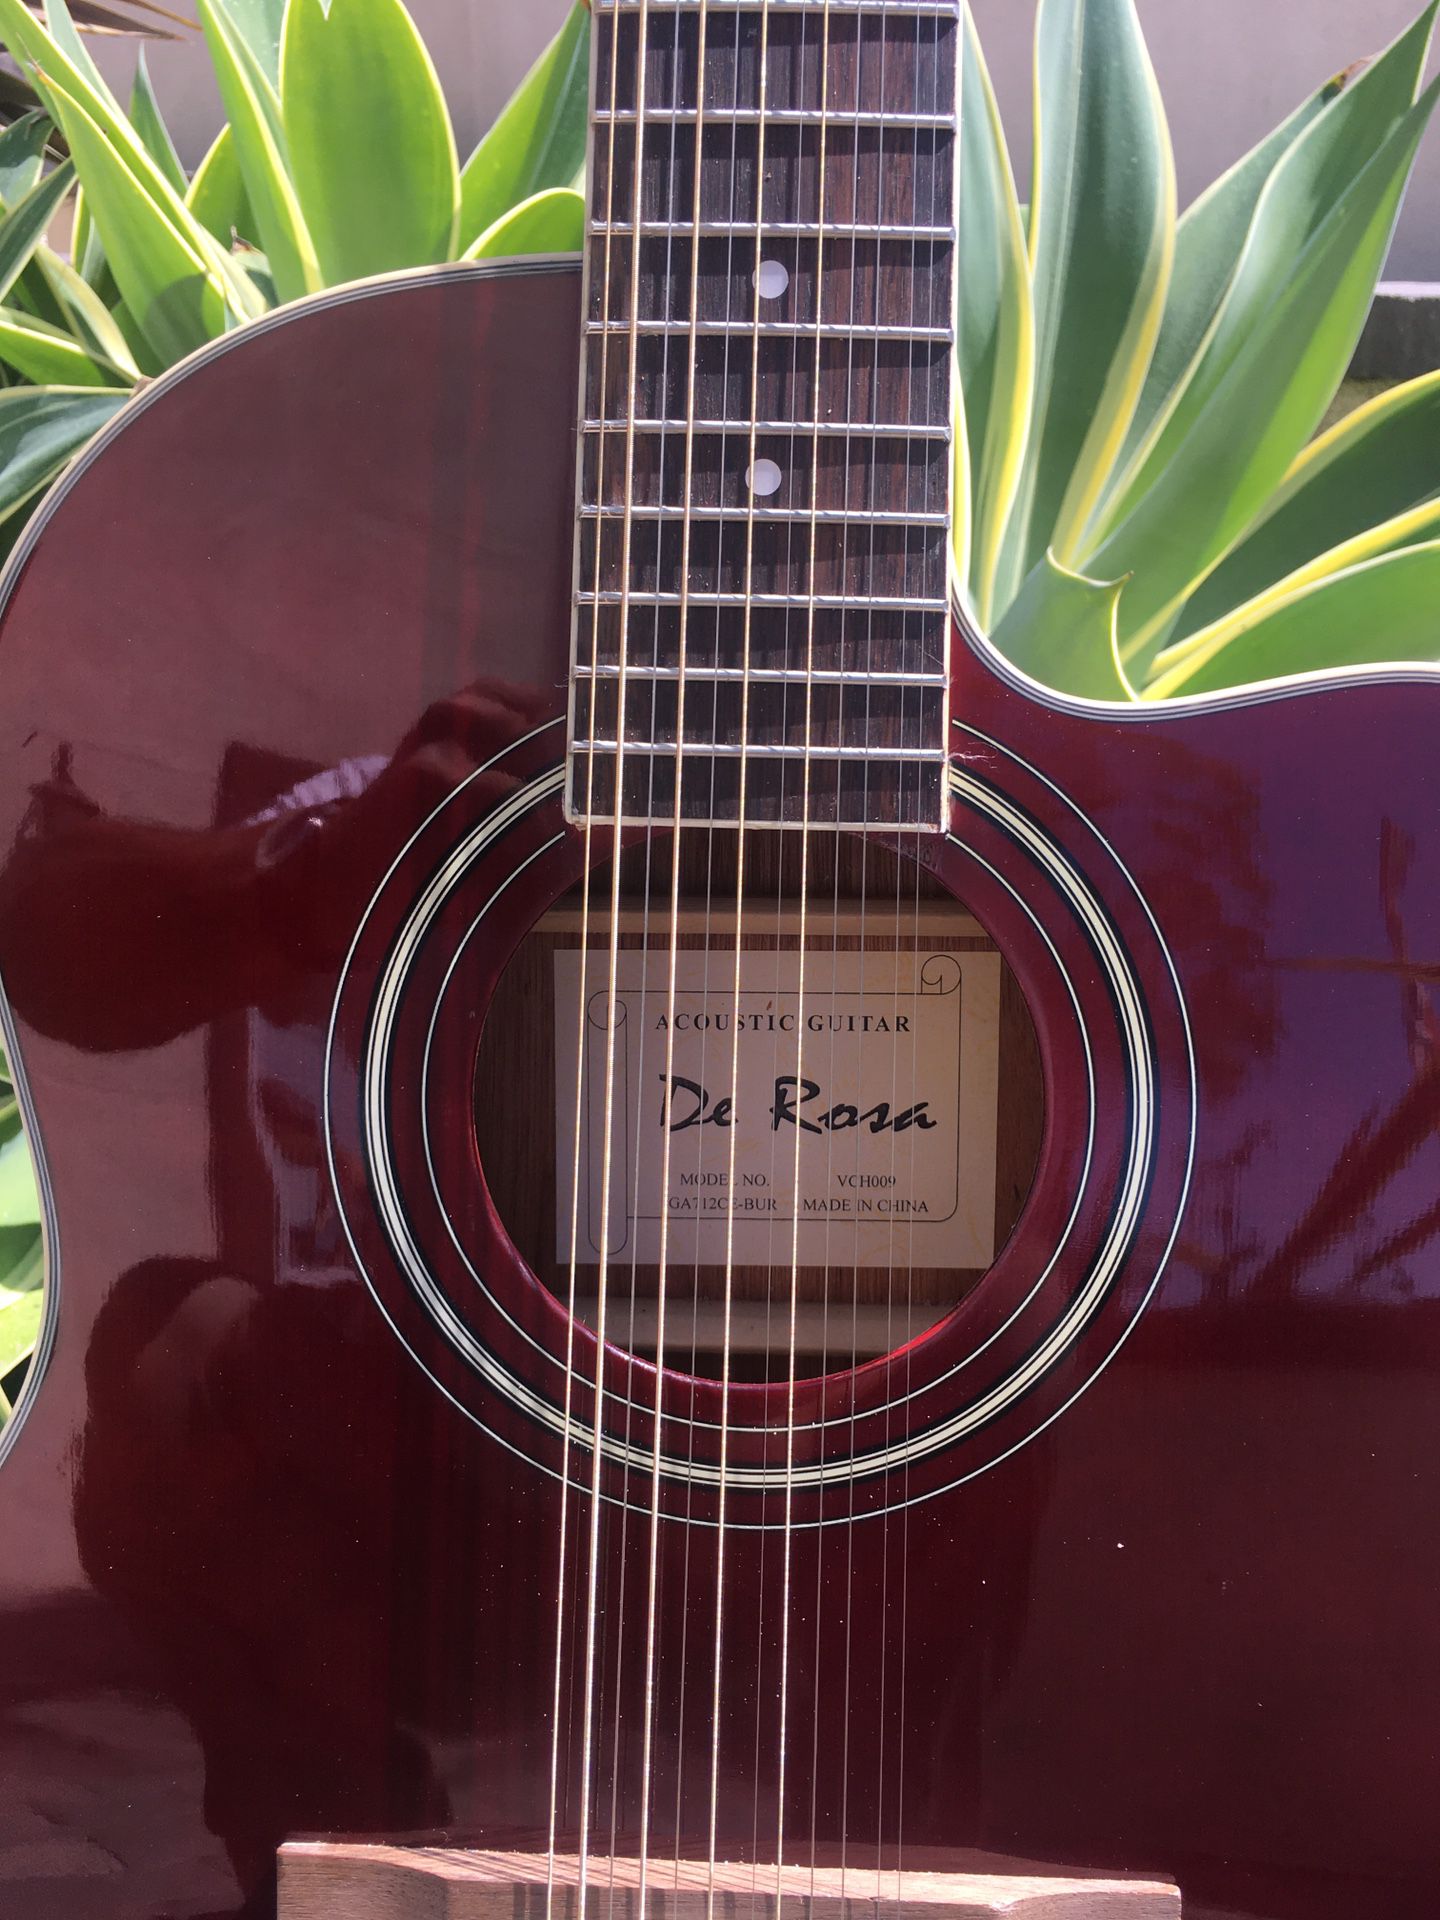 De Rosa 12 string guitar